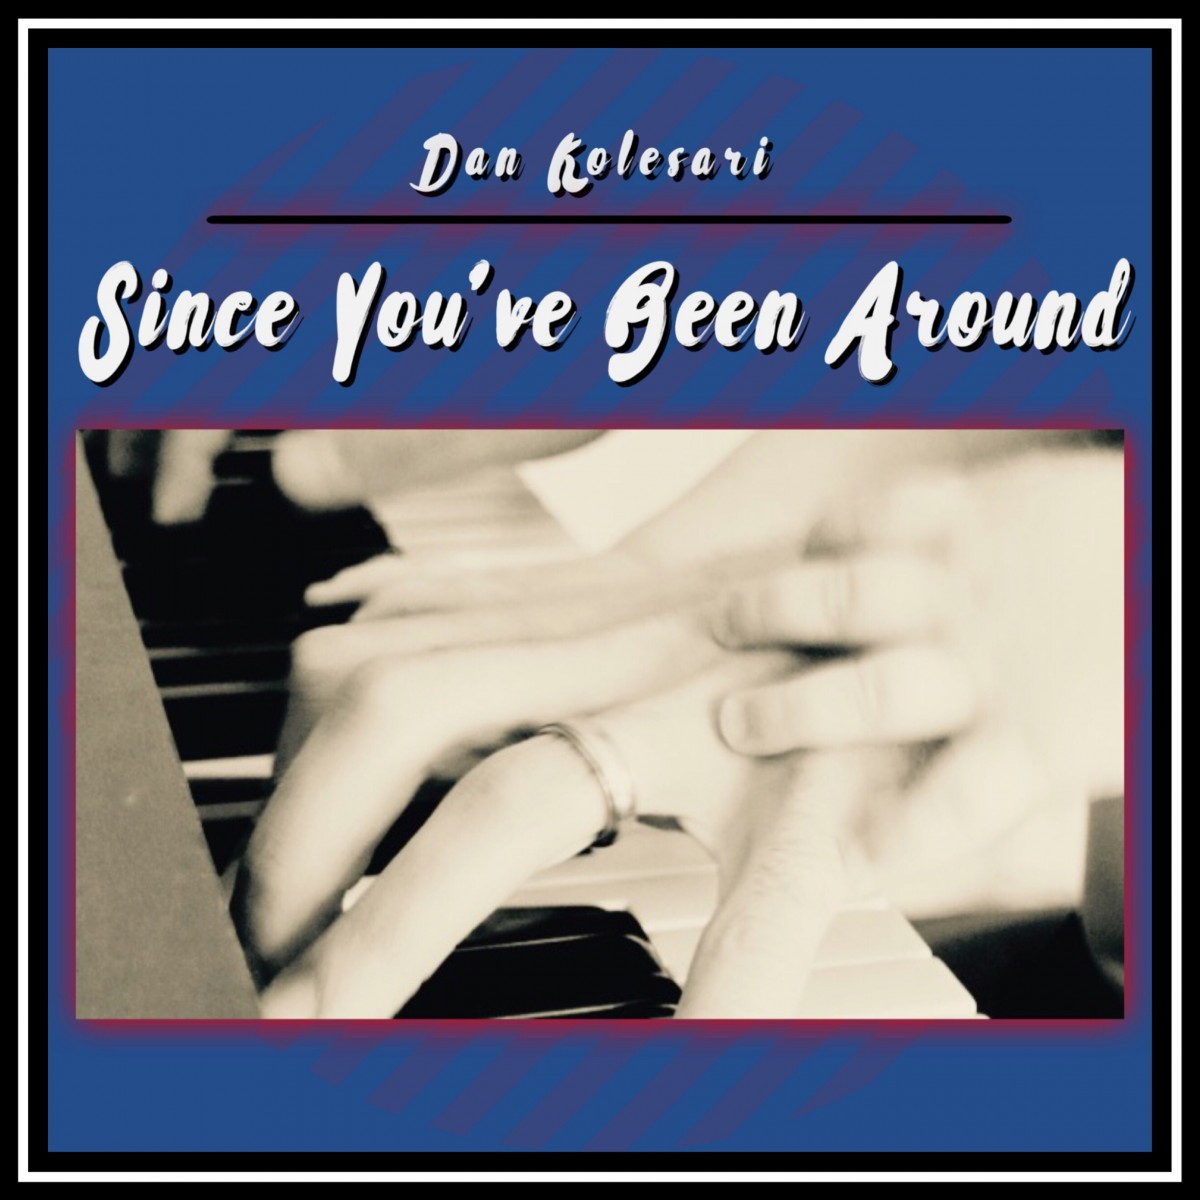 Dan Kolesari - Since You’ve Been Around